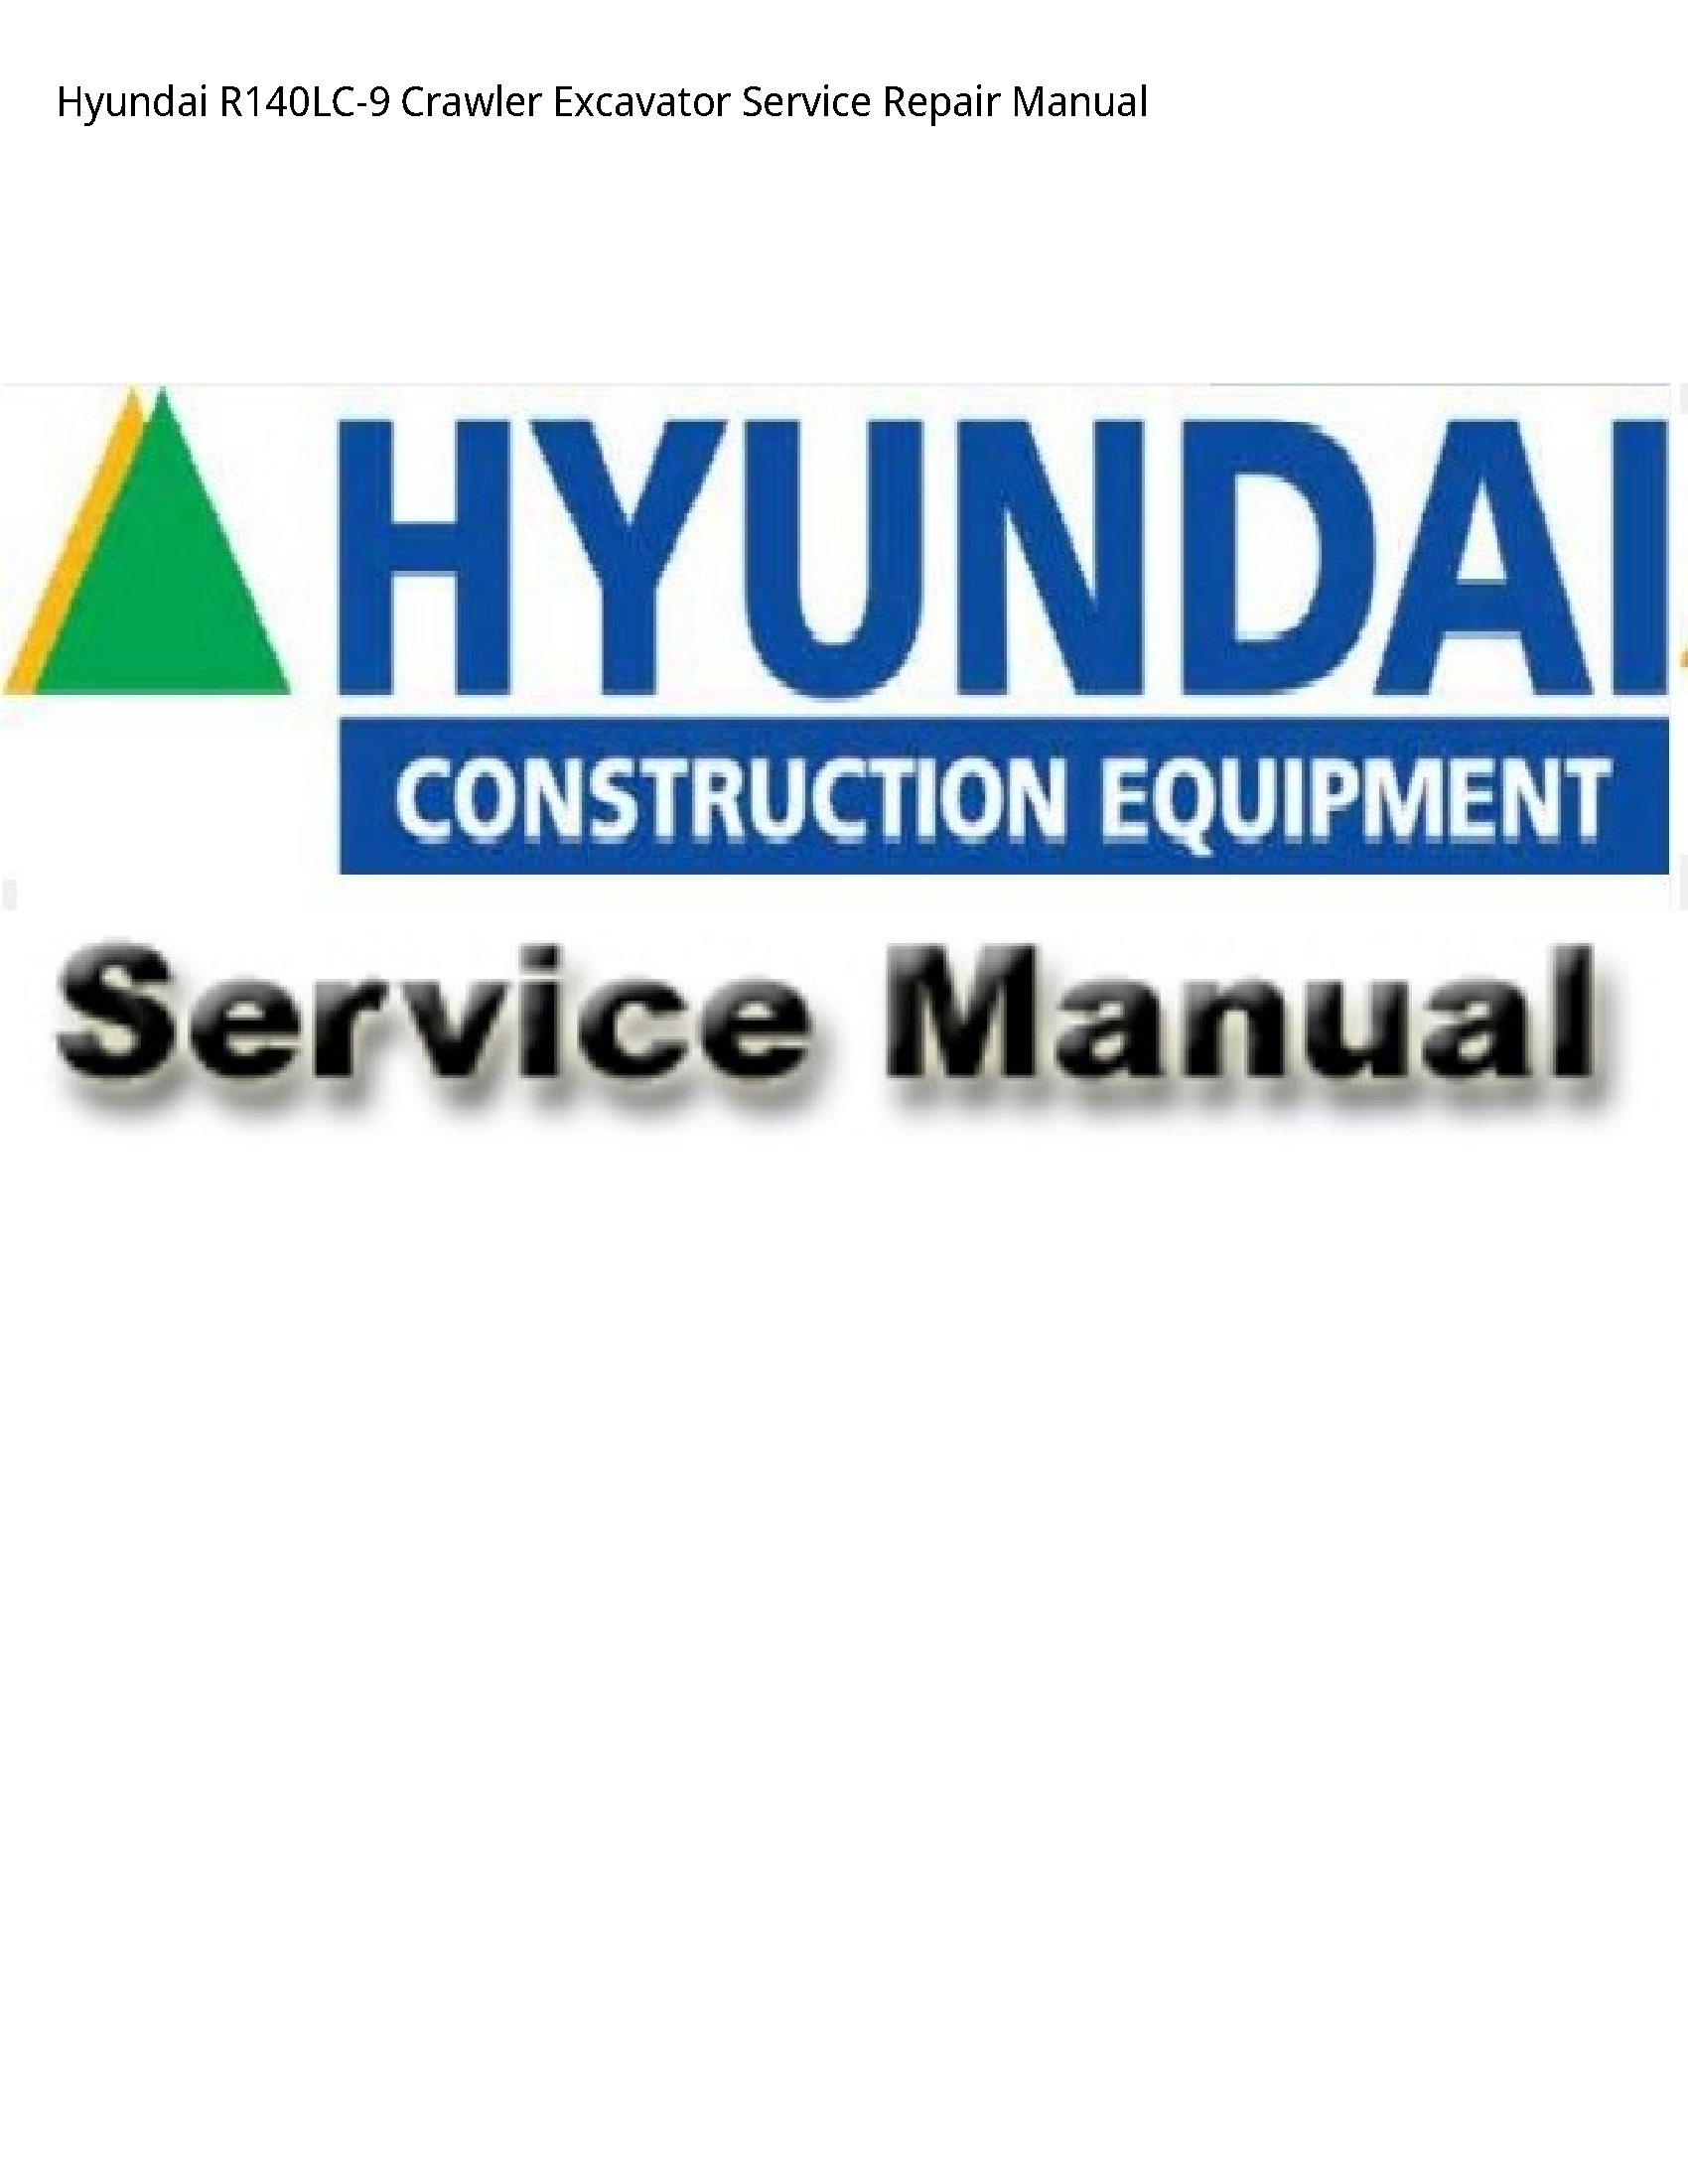 Hyundai R140LC-9 Crawler Excavator manual